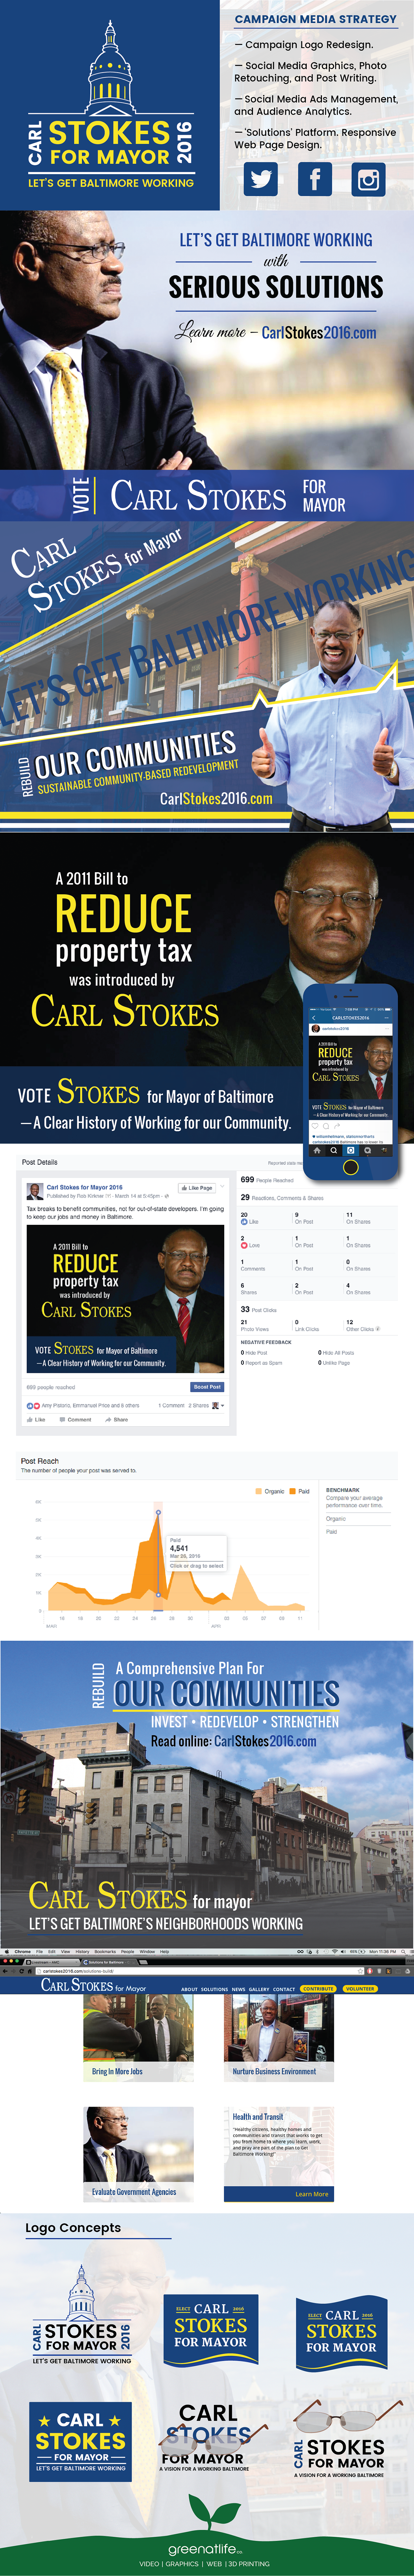 political president mayor senate logo poster facebook strategy New York Baltimore usa designs winner Election oswald